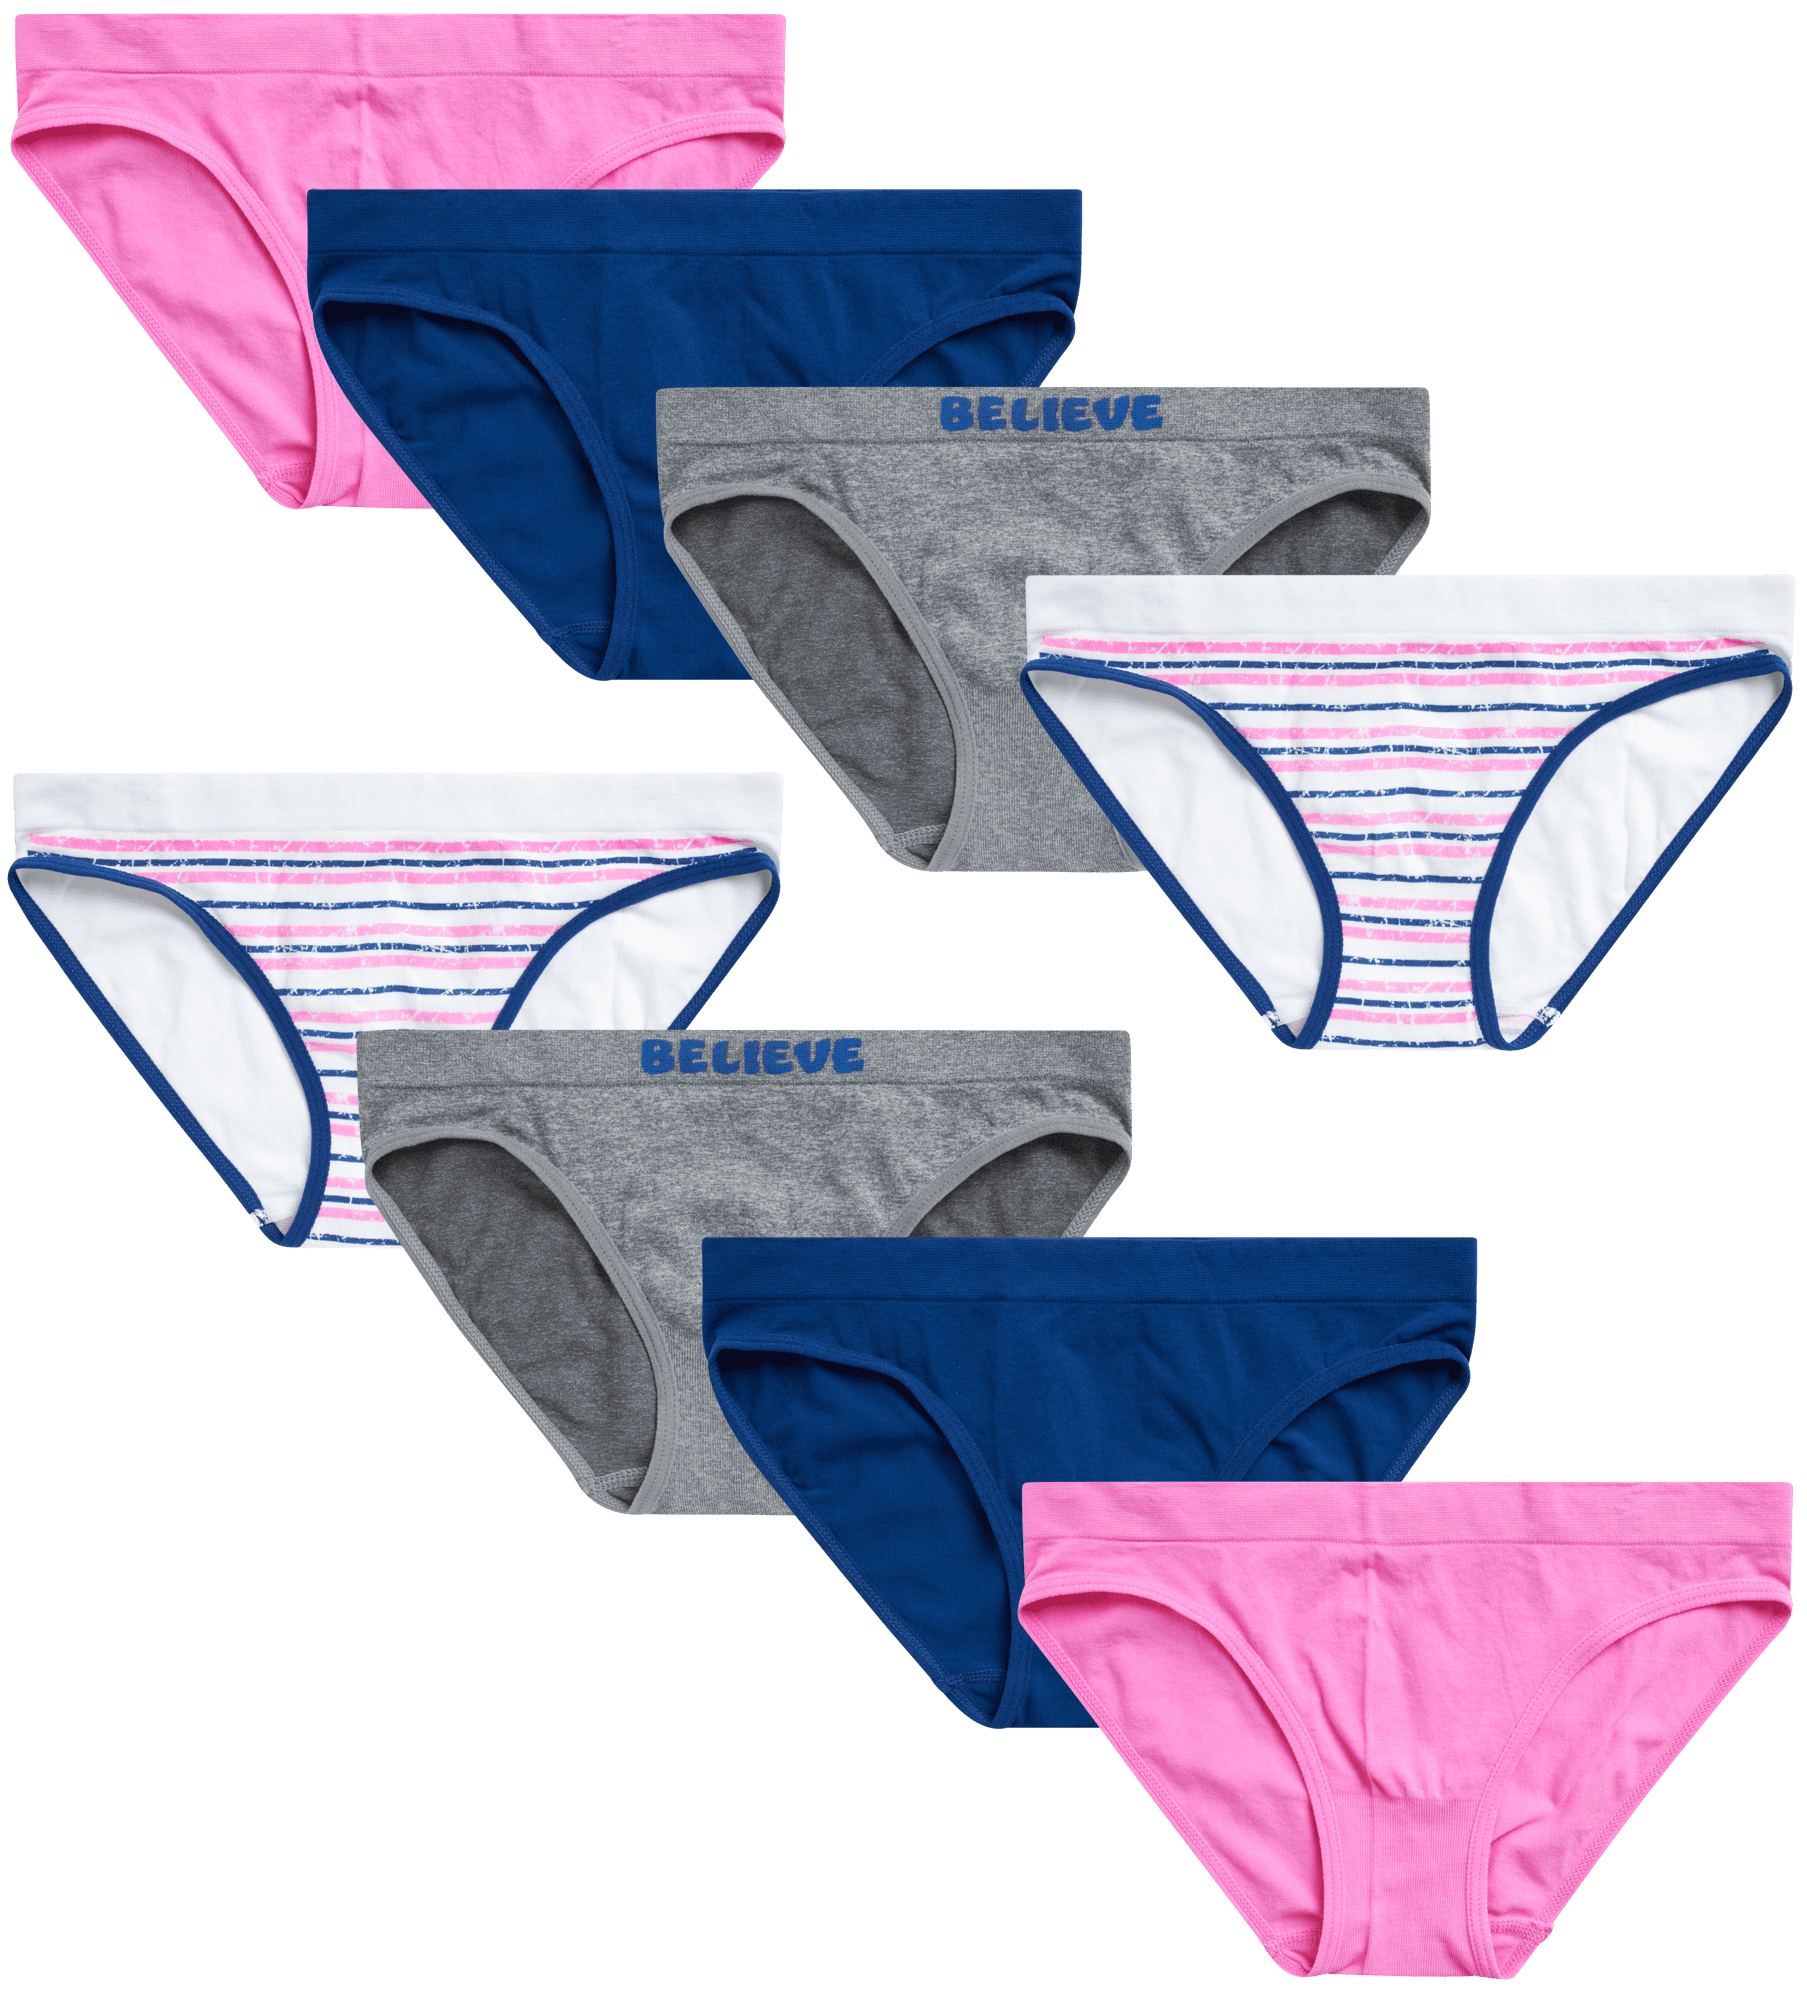 Teen Girl's Underwear